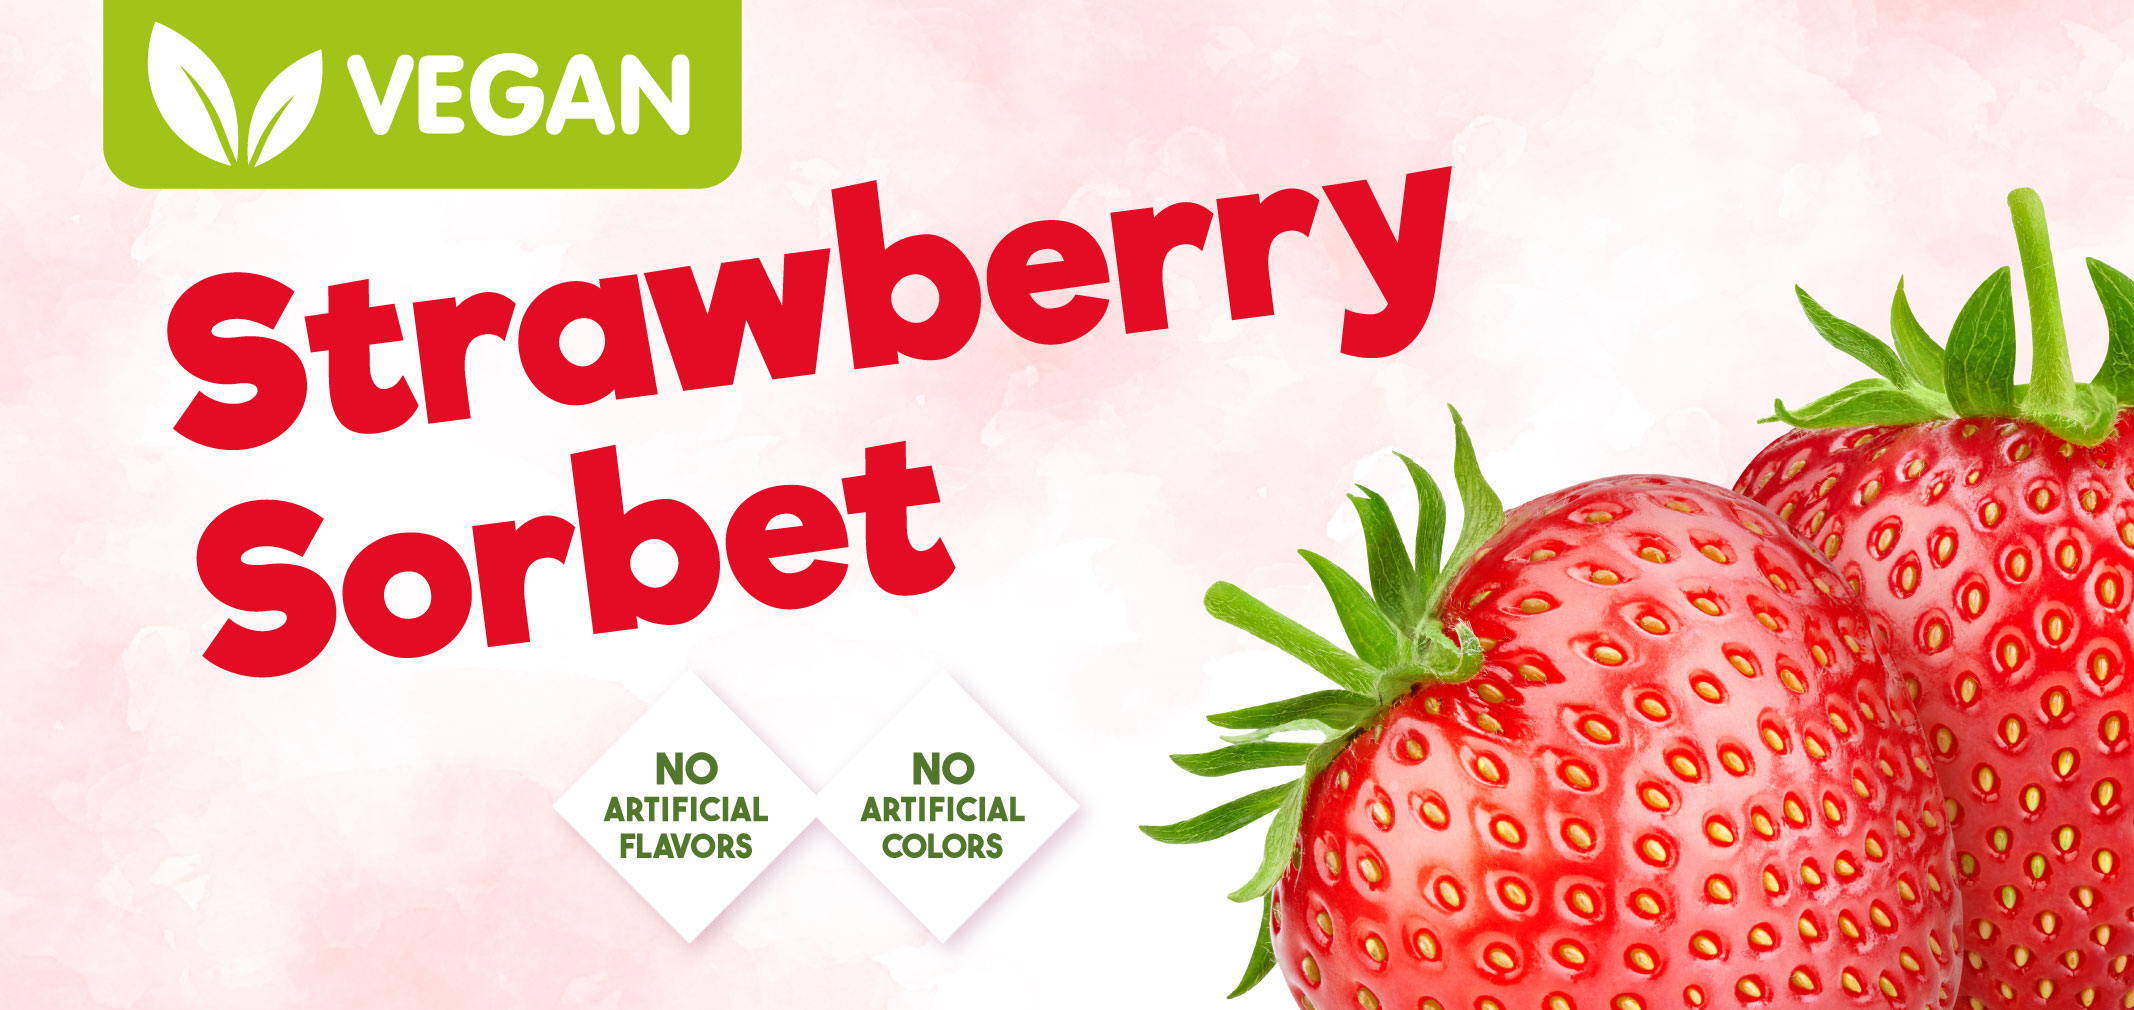 vegan strawberry sorbet label image